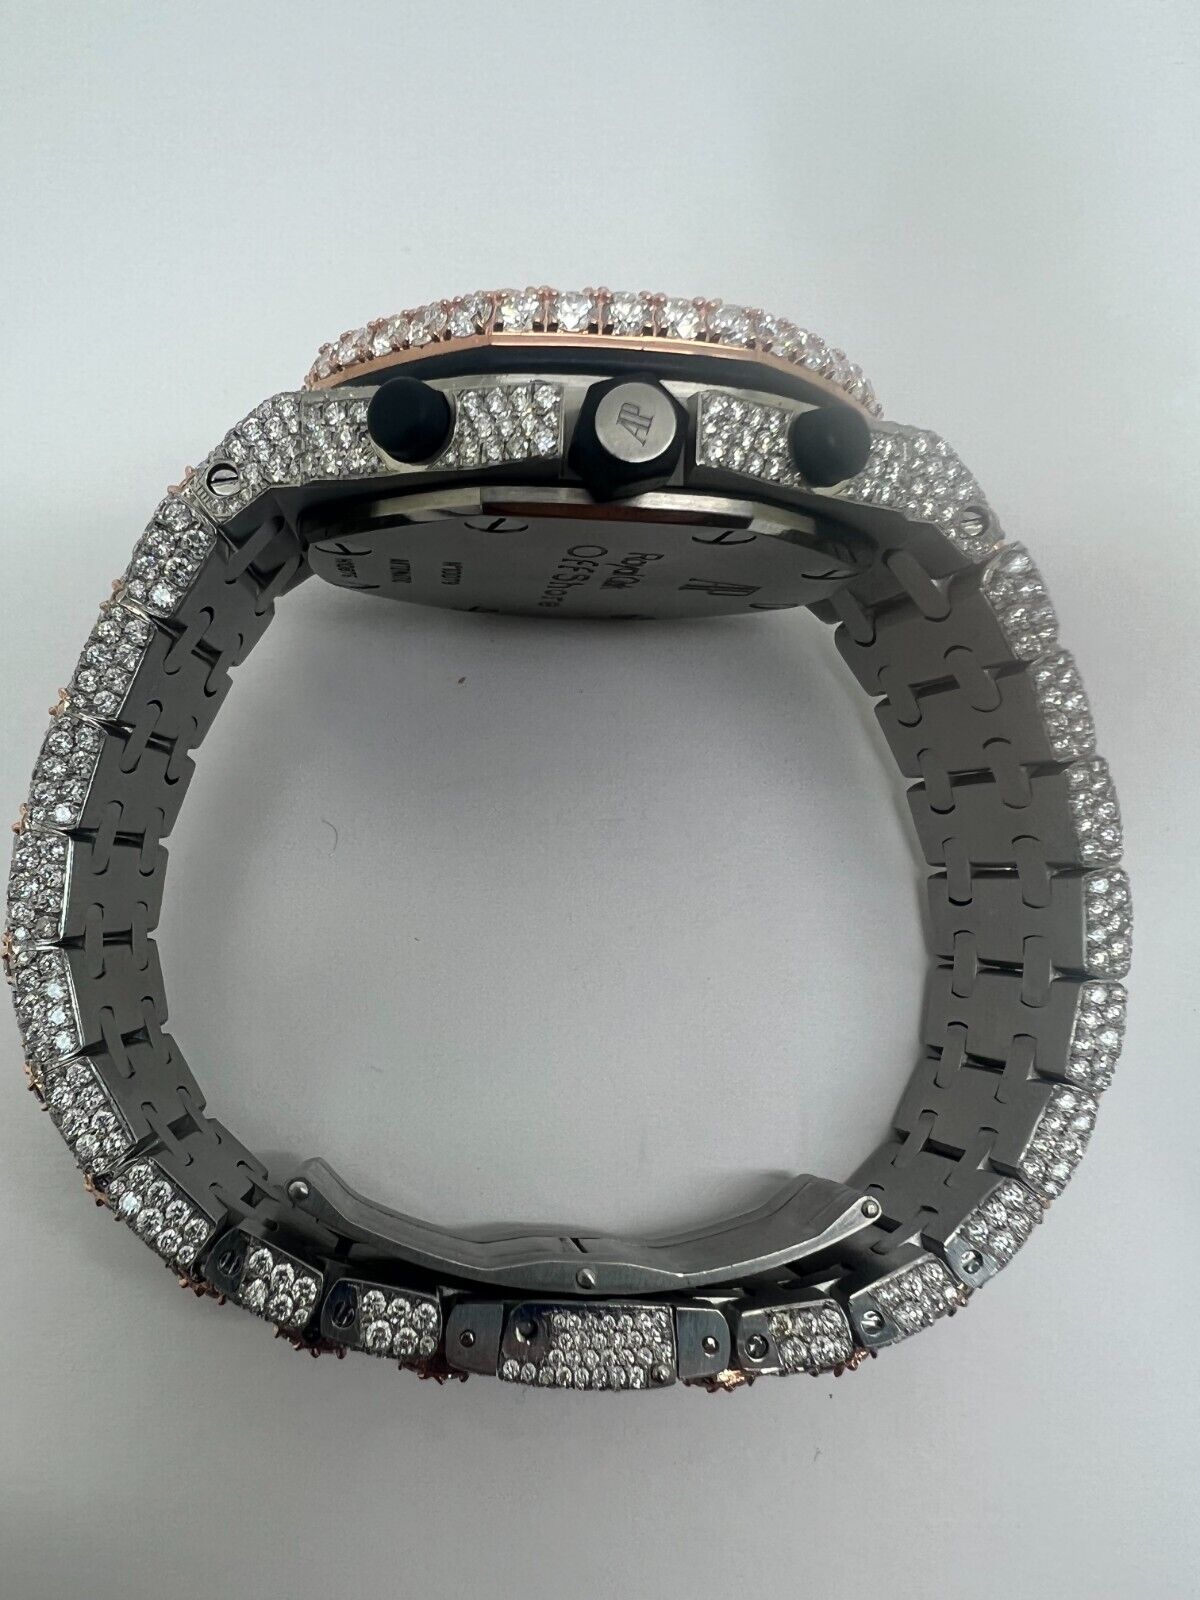 Audemars Piguet Royal Oak Offshore 45 Cts E VVS Diamond Men's Watch